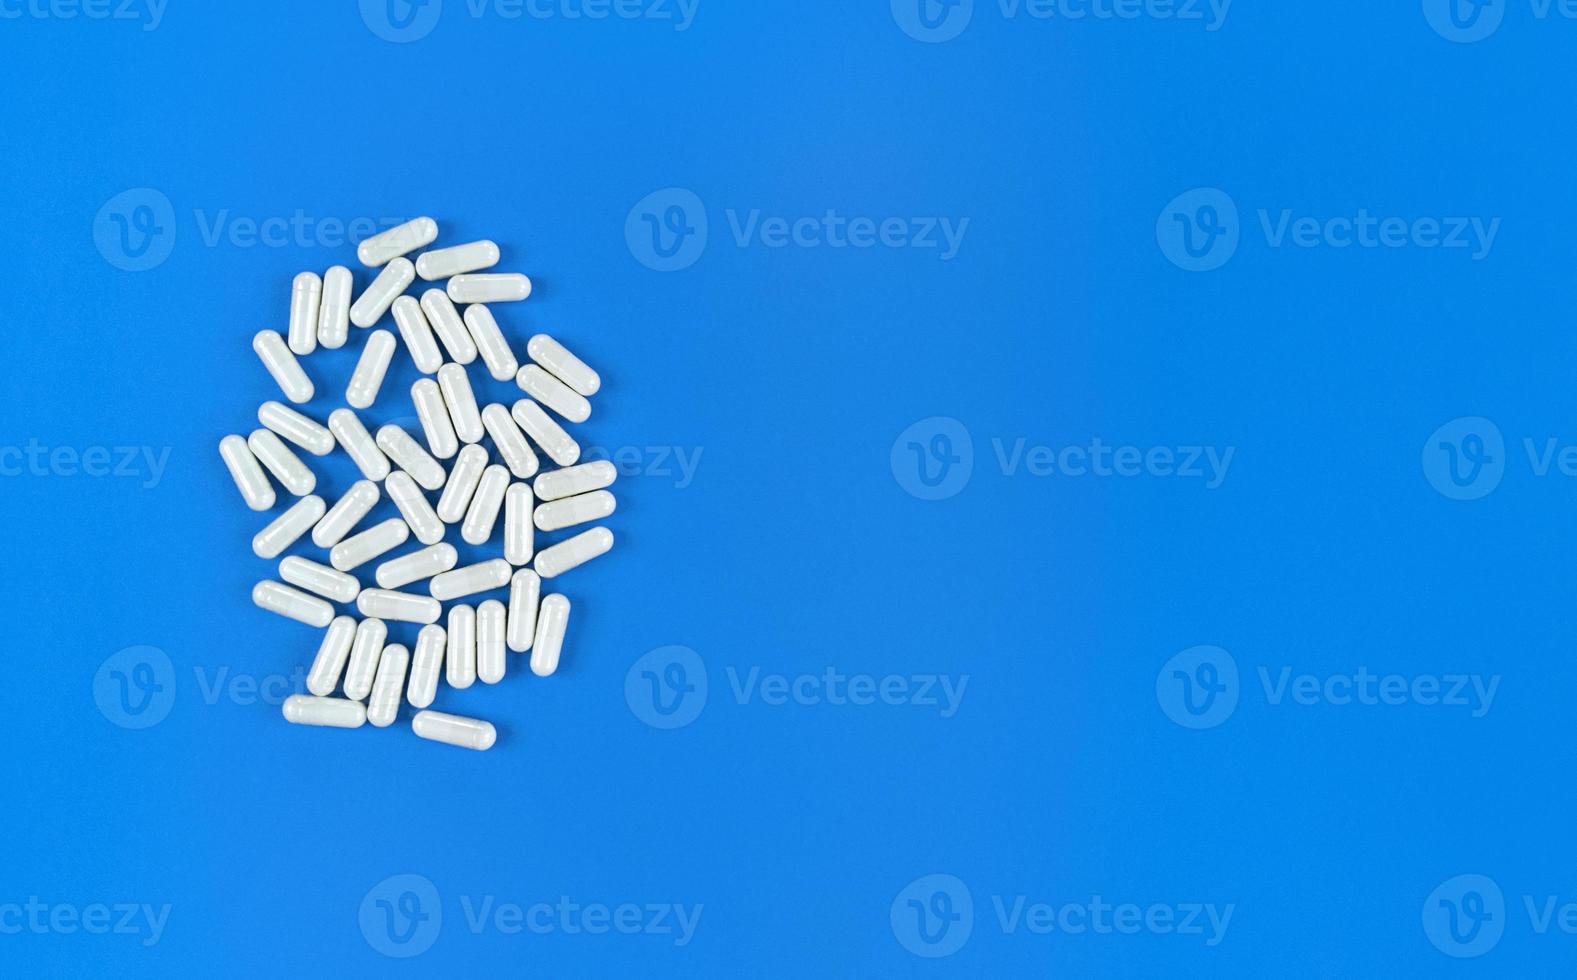 vita spridda piller kapslar på blå bakgrund med kopia utrymme foto